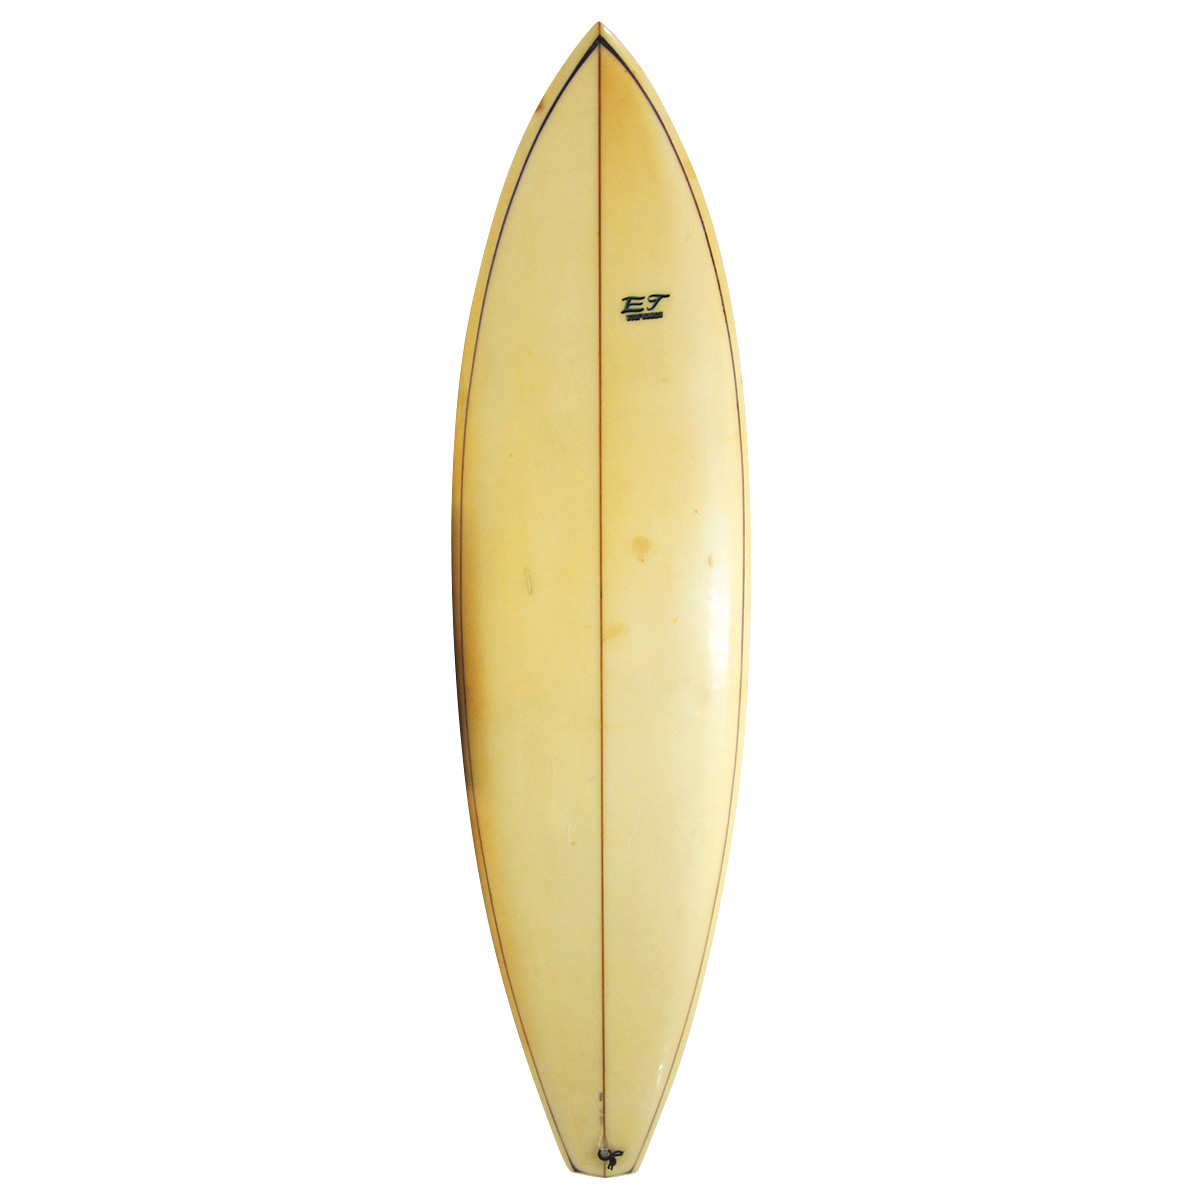  / ET Surfboards / 60'S Diamond Tail 6'7